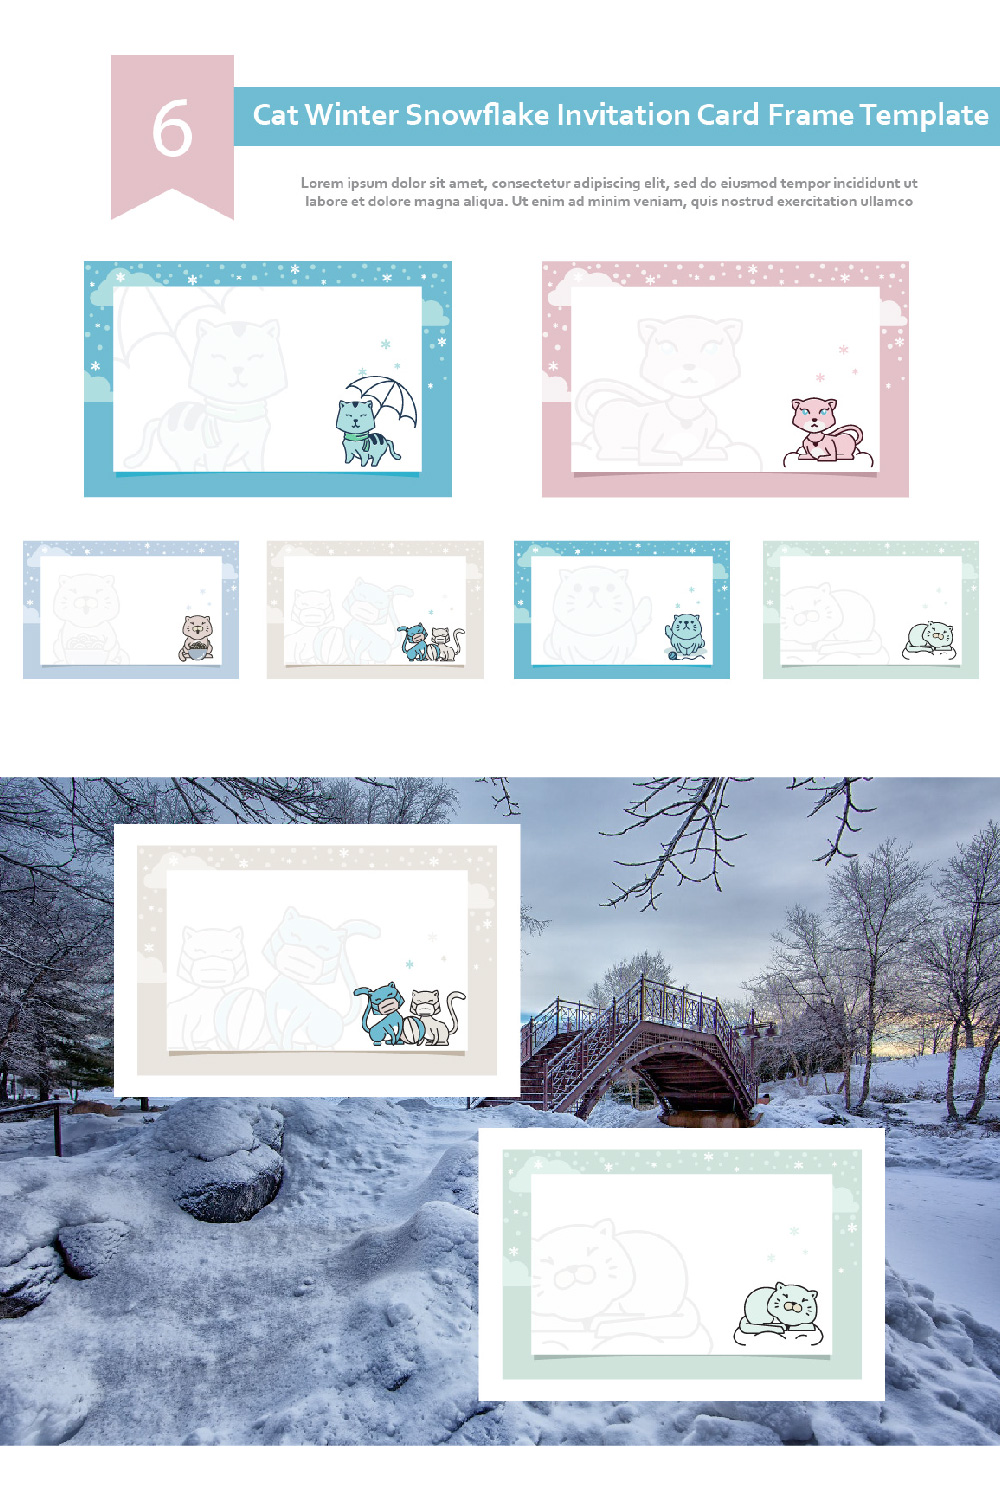 6 Cat Winter Snowflake Invitation Card Frame Template pinterest image.